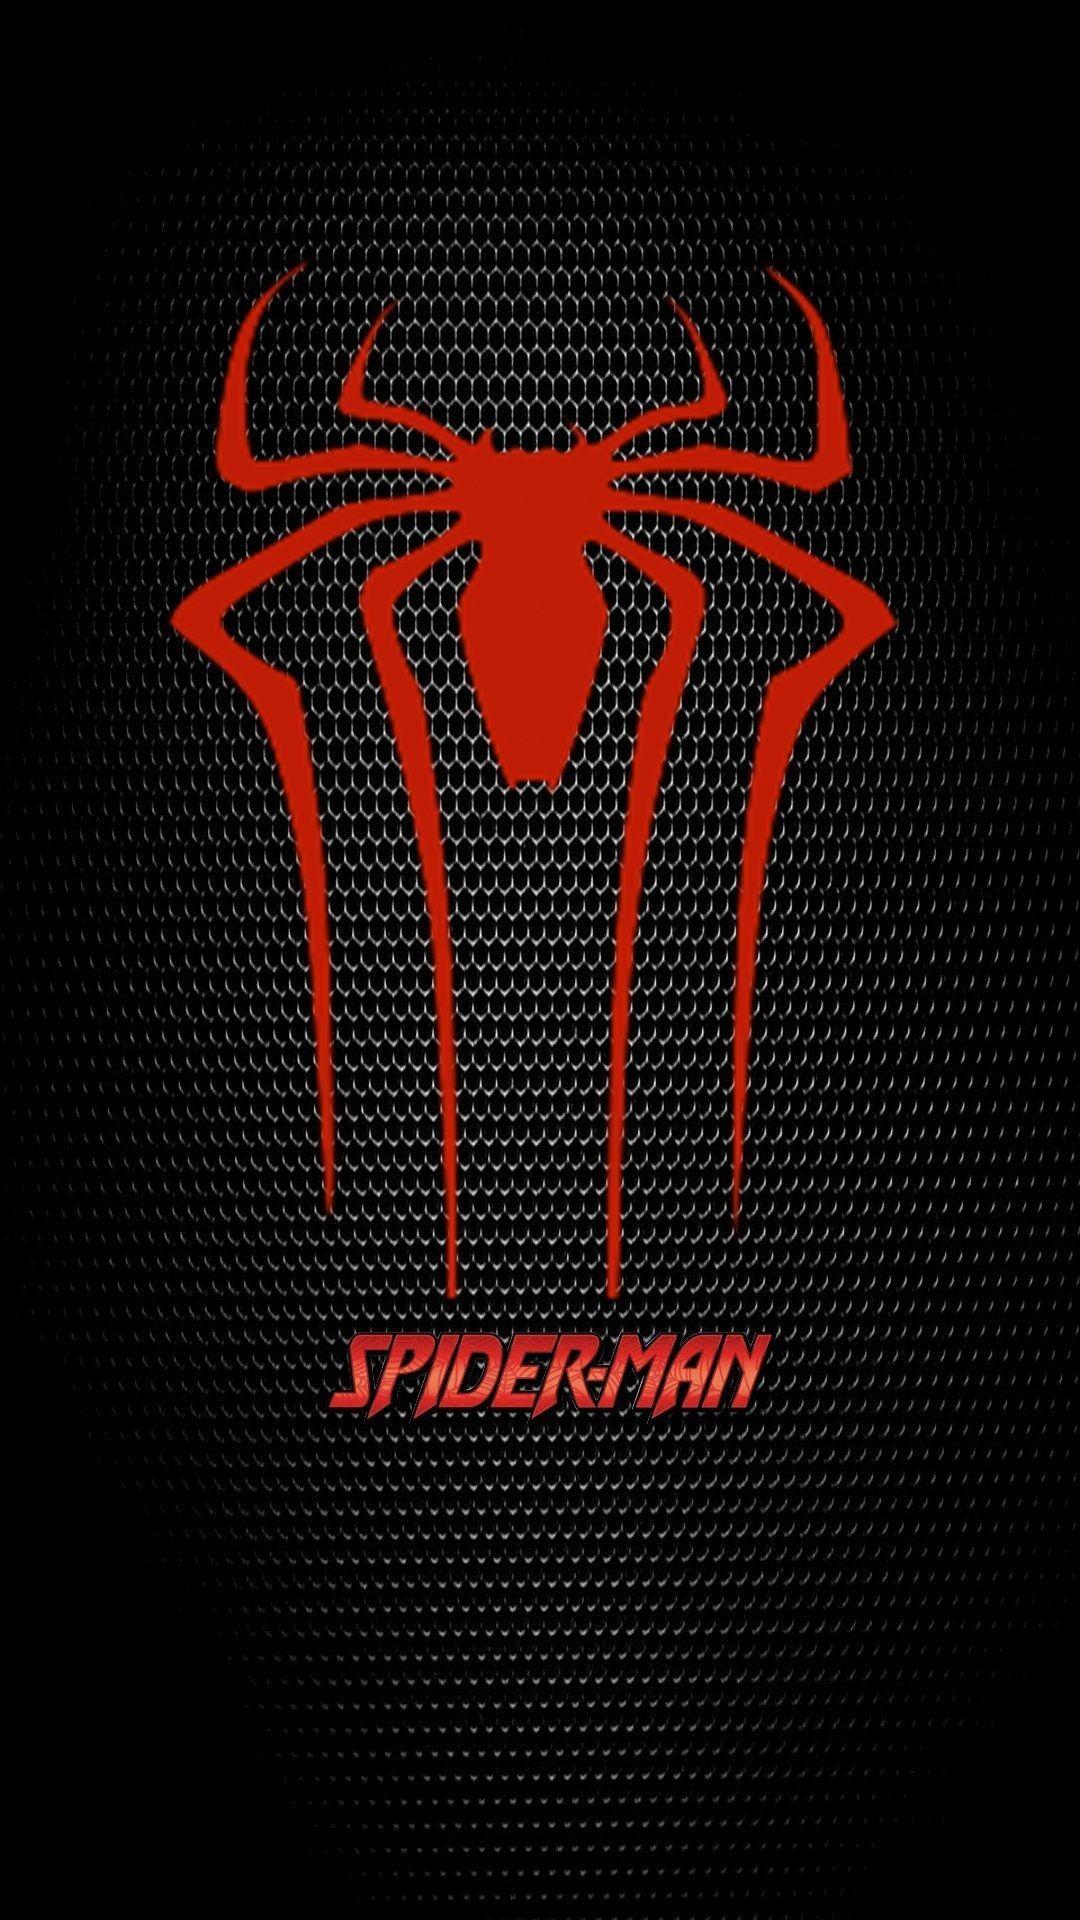 logos spiderman iphone 6 plus wallpaper spiderma iphone 6